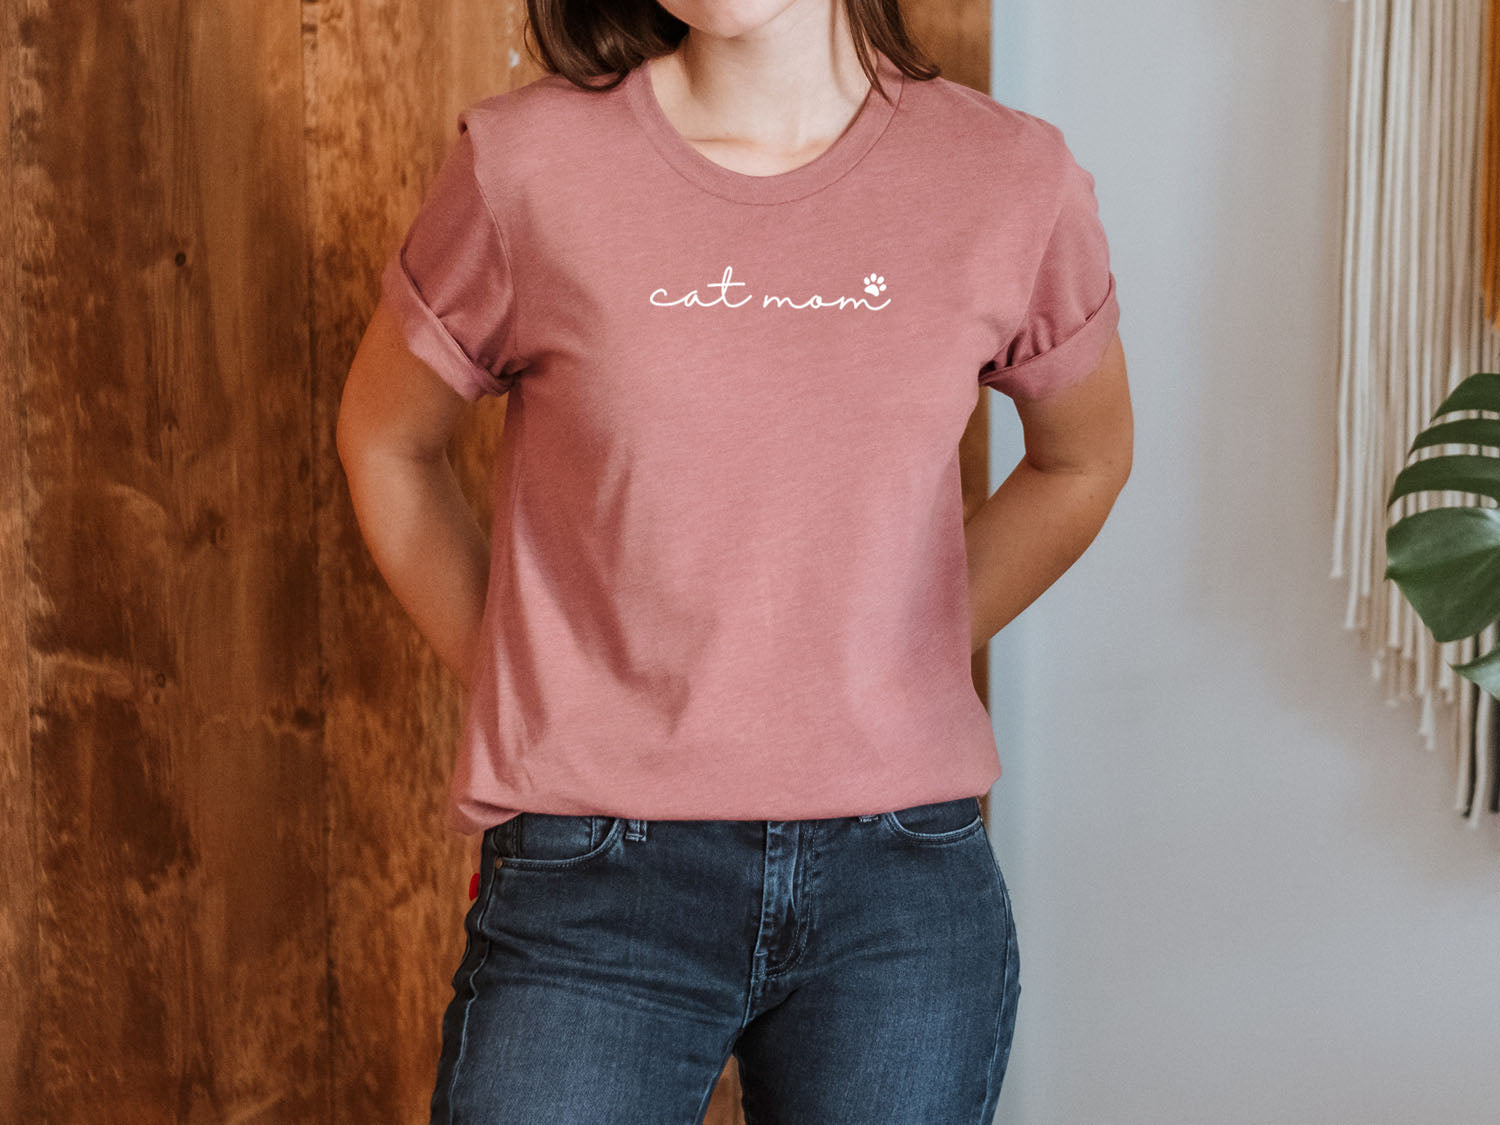 Cat Mom Small Letters T-shirt - Fun Pet Love Minimal Design Printed Tee Shirt